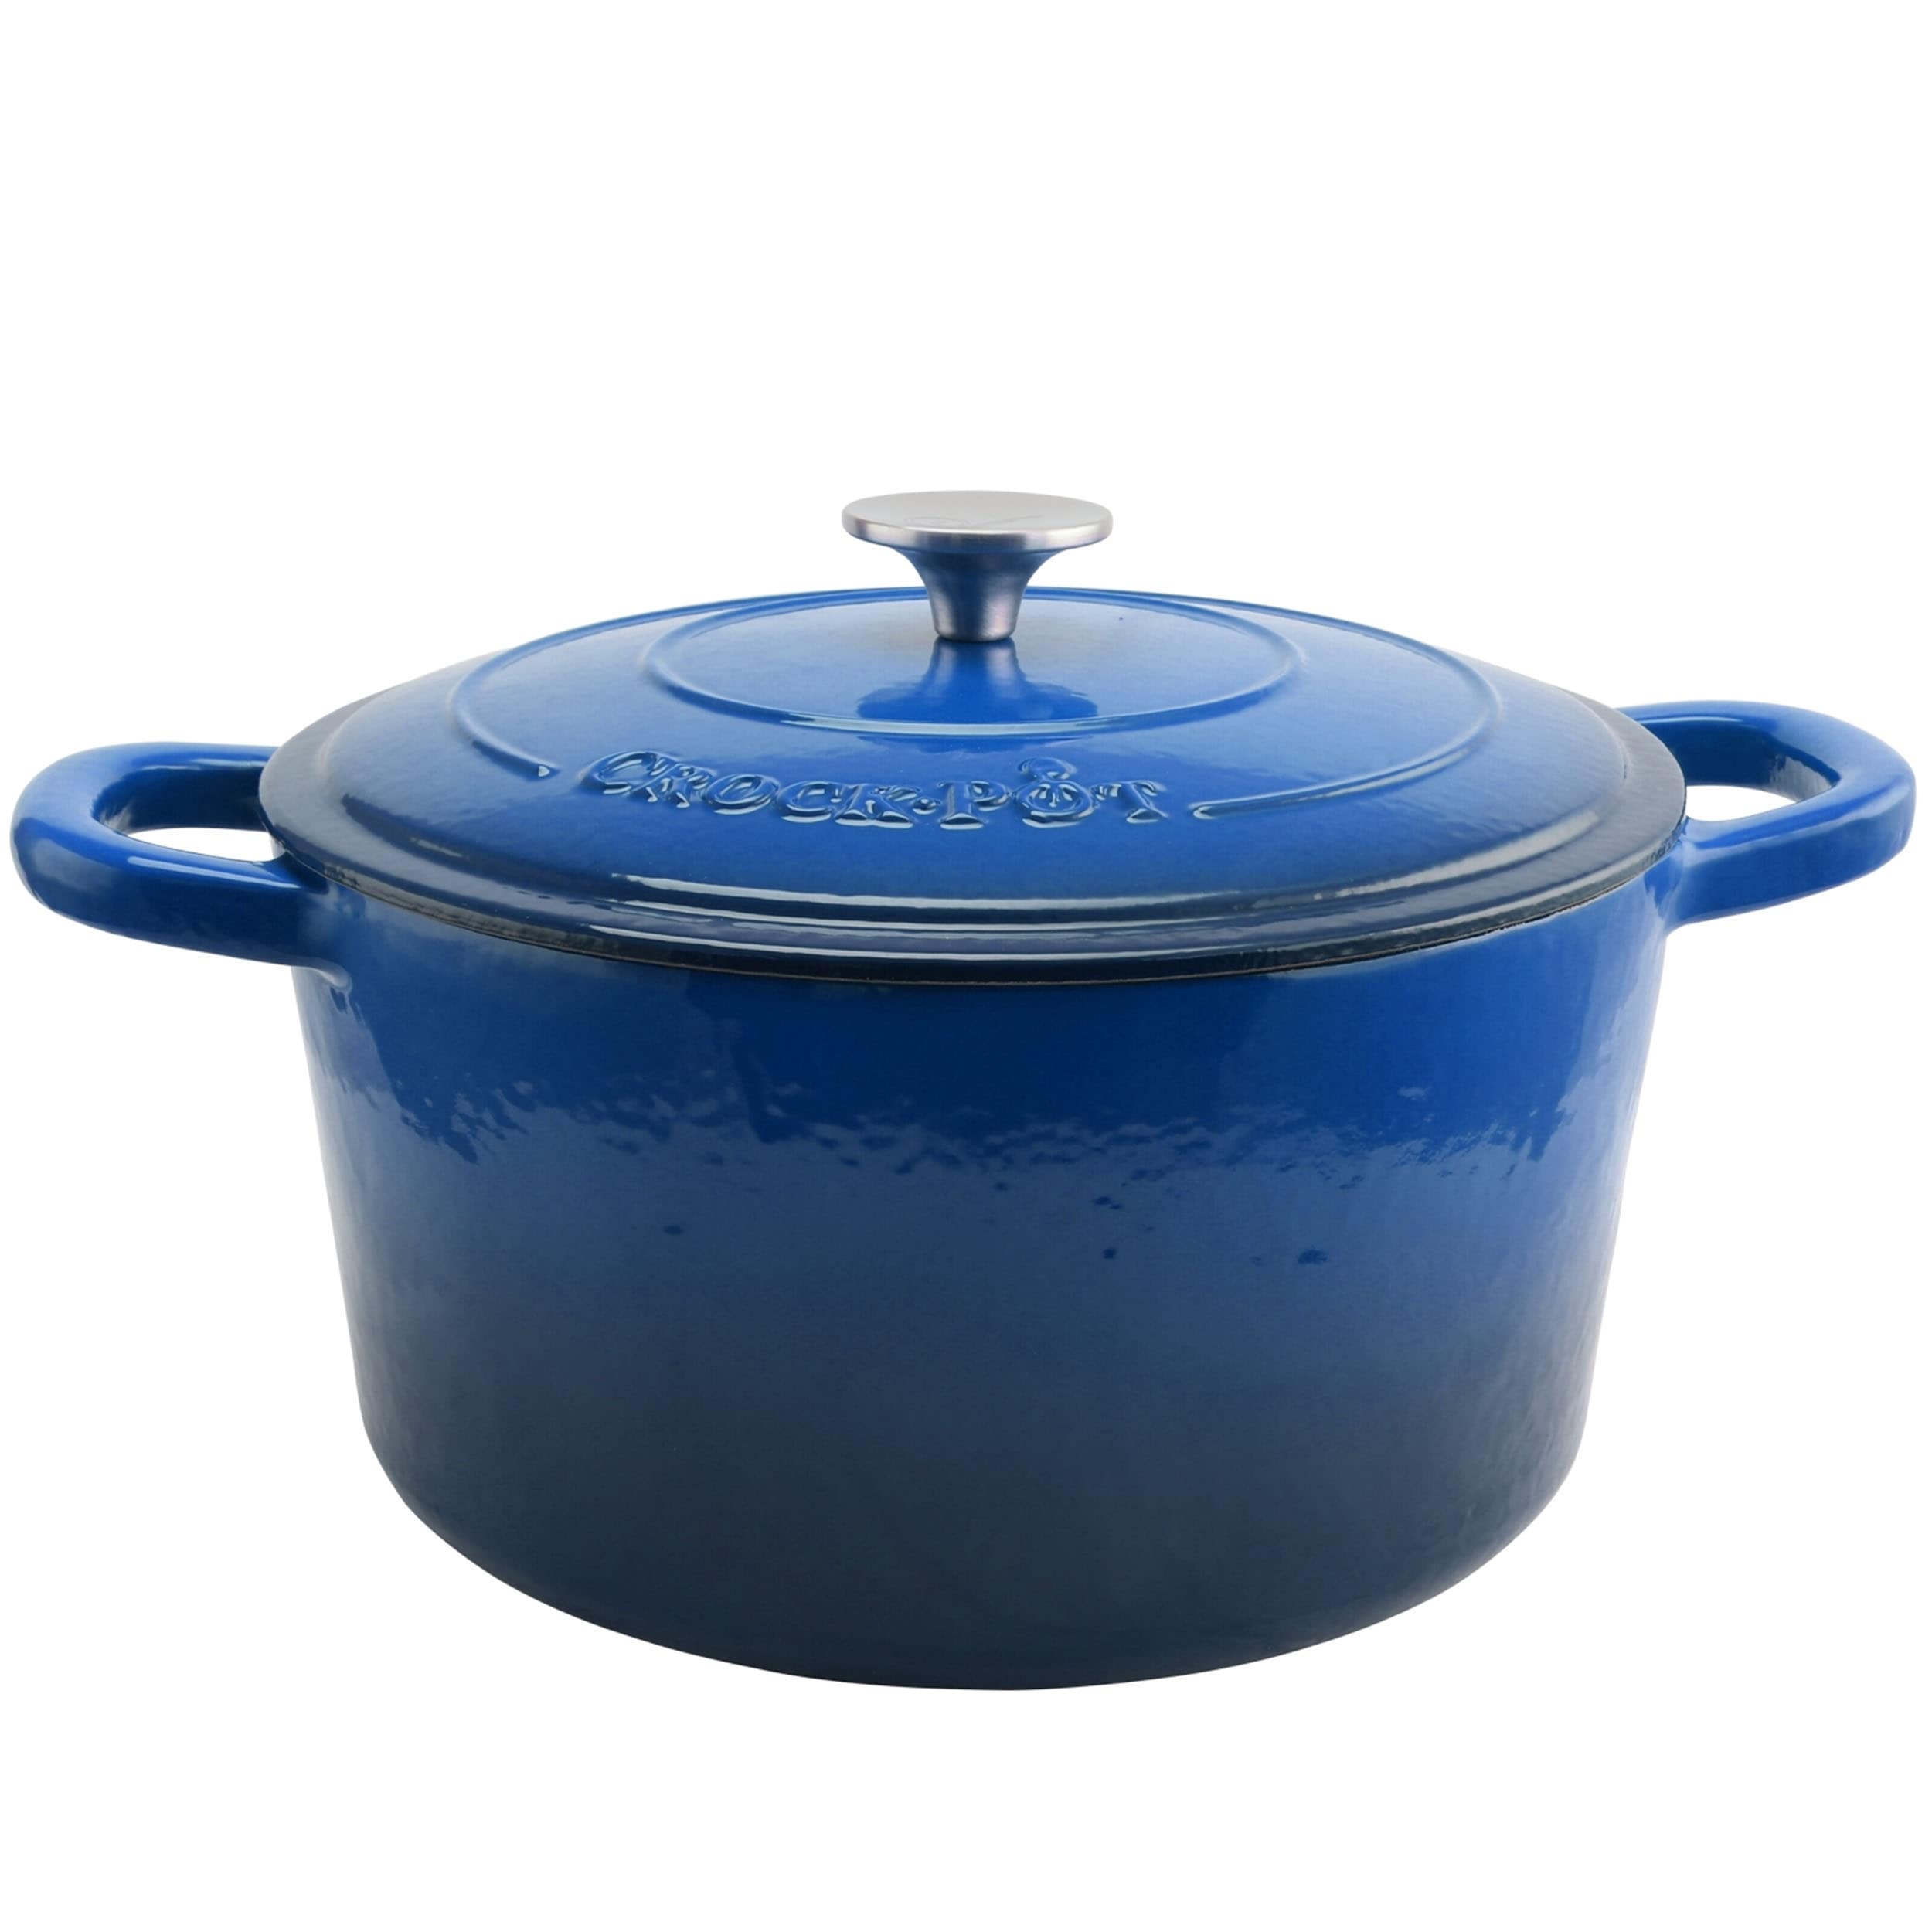 https://ak1.ostkcdn.com/images/products/is/images/direct/6d91790172dd28175db0804b21f2935fda36ba0e/Crock-Pot-Artisan-7-Quart-Round-Cast-Iron-Dutch-Oven-in-Sapphire-Blue.jpg